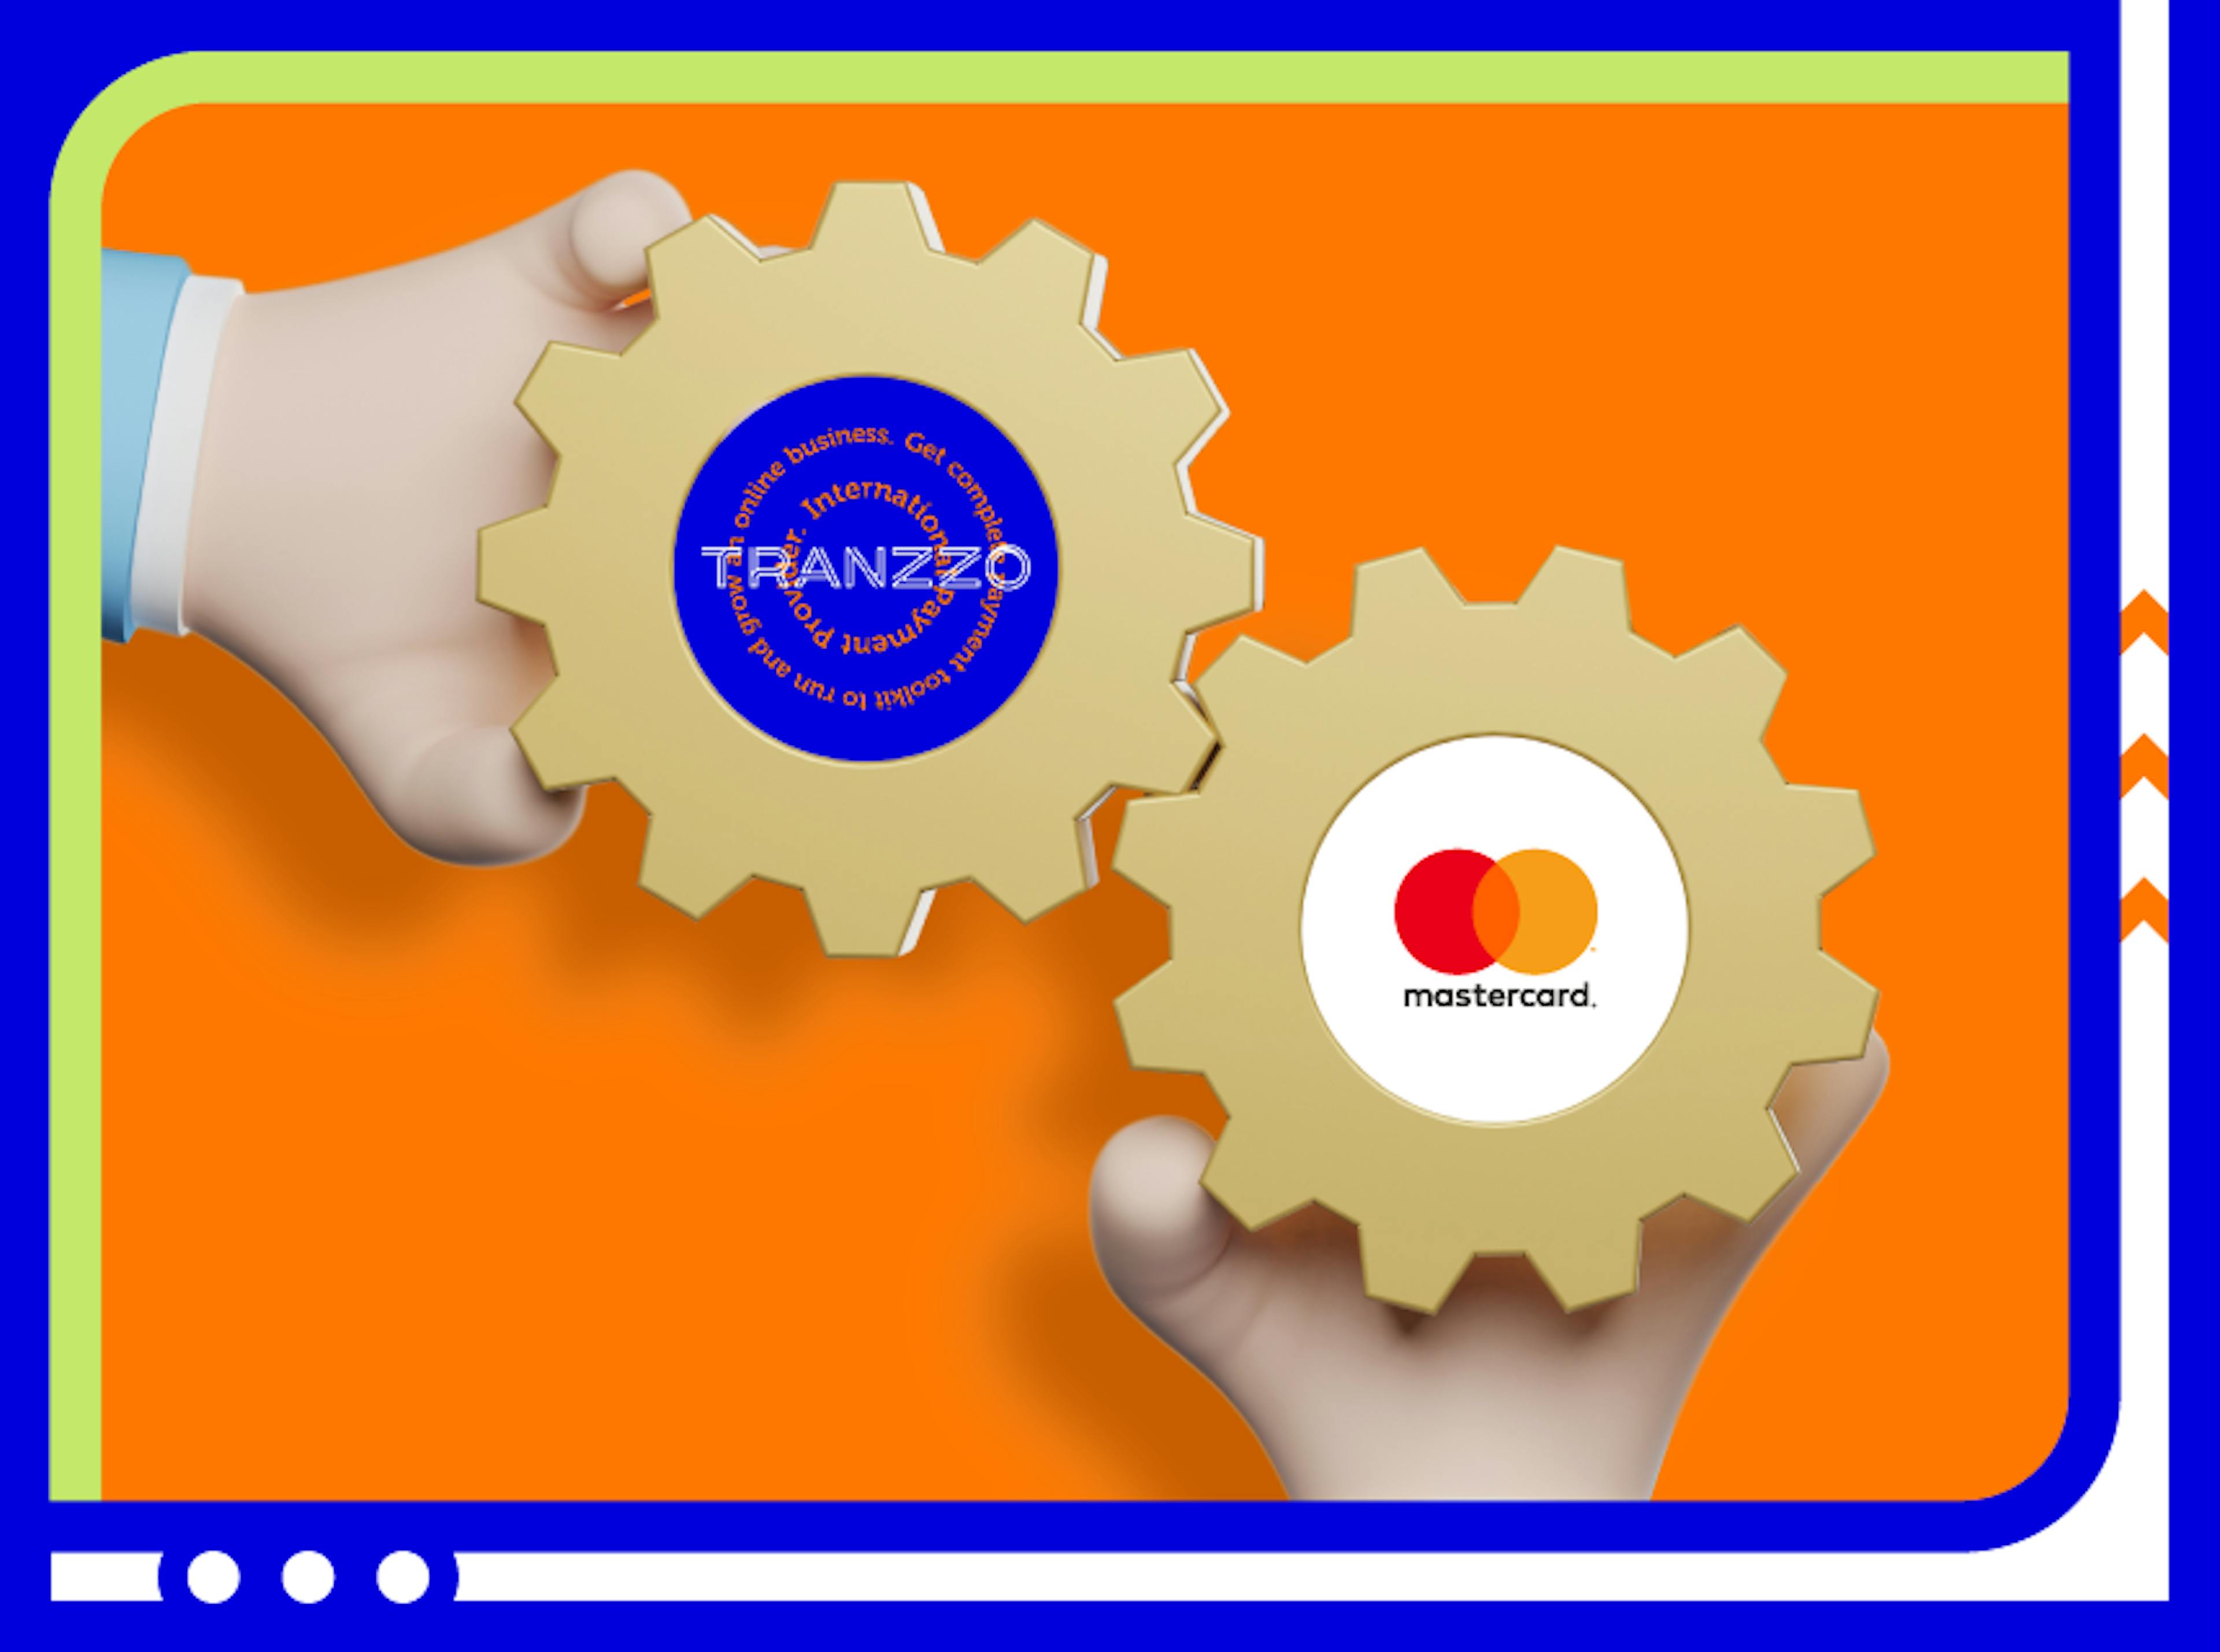 Tranzzo подключил решение для токенизации карт от Mastercard 